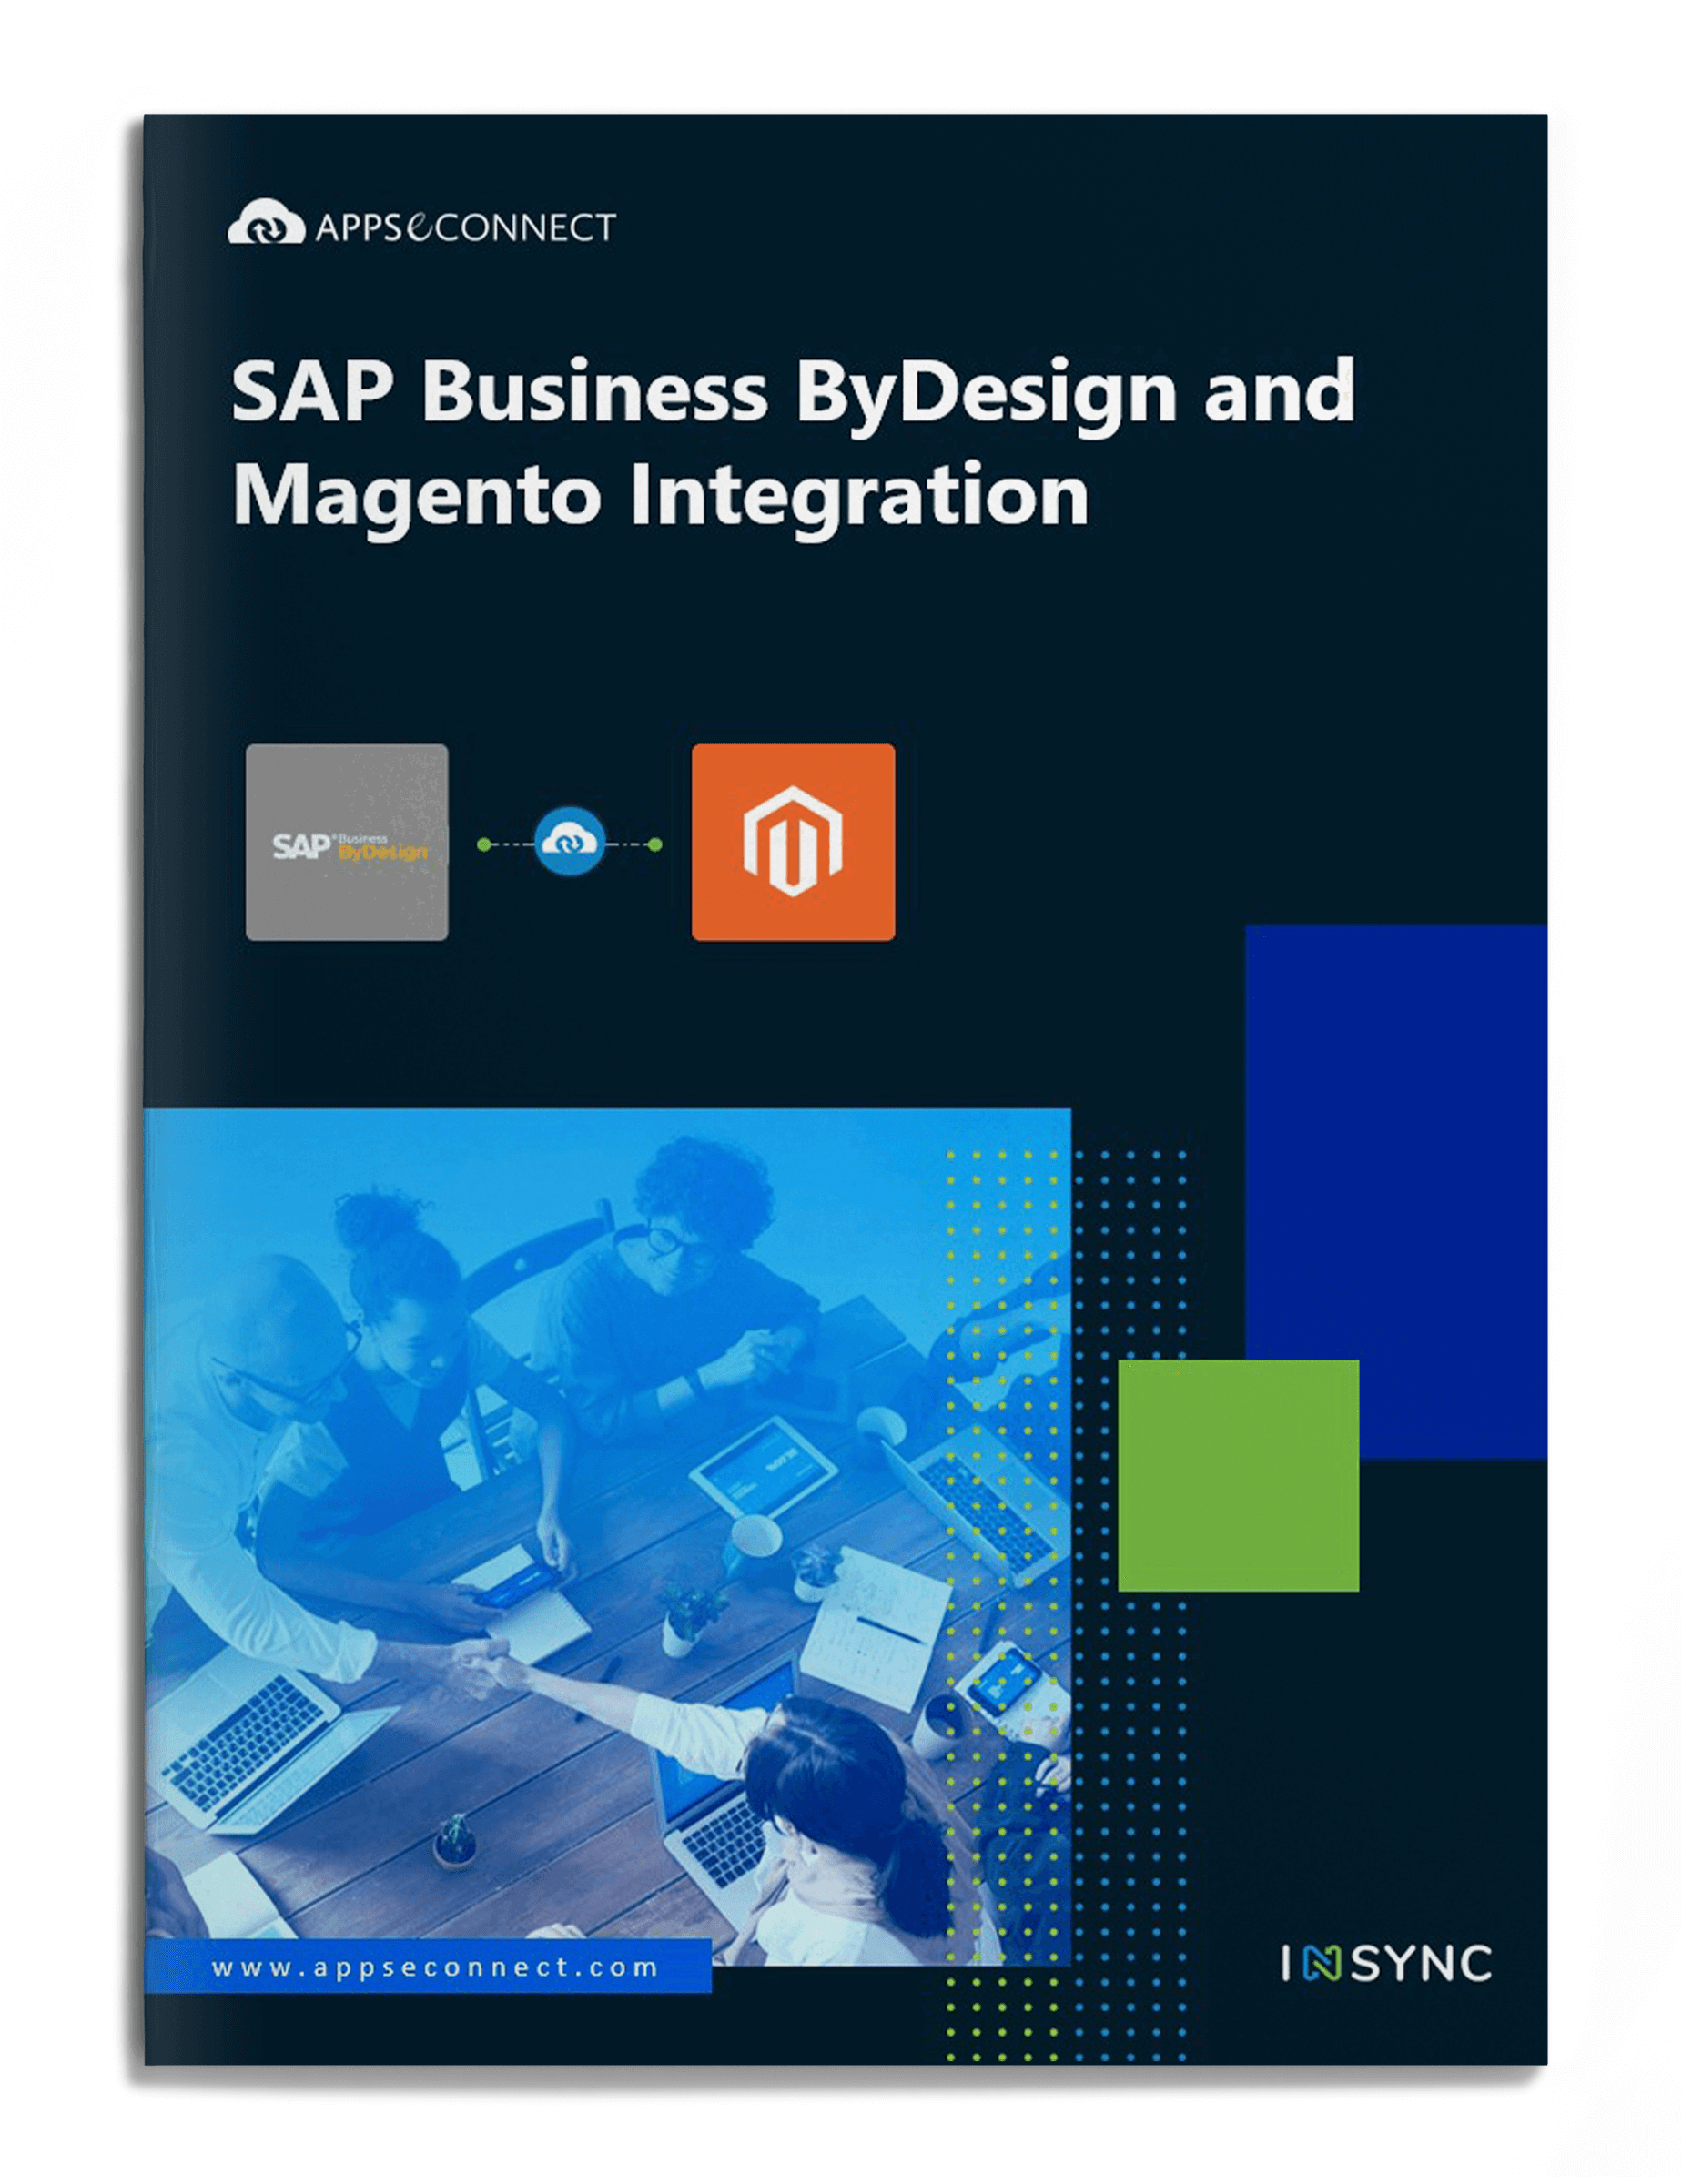 sap-business-bydesign-magento-integration-brochure-cover